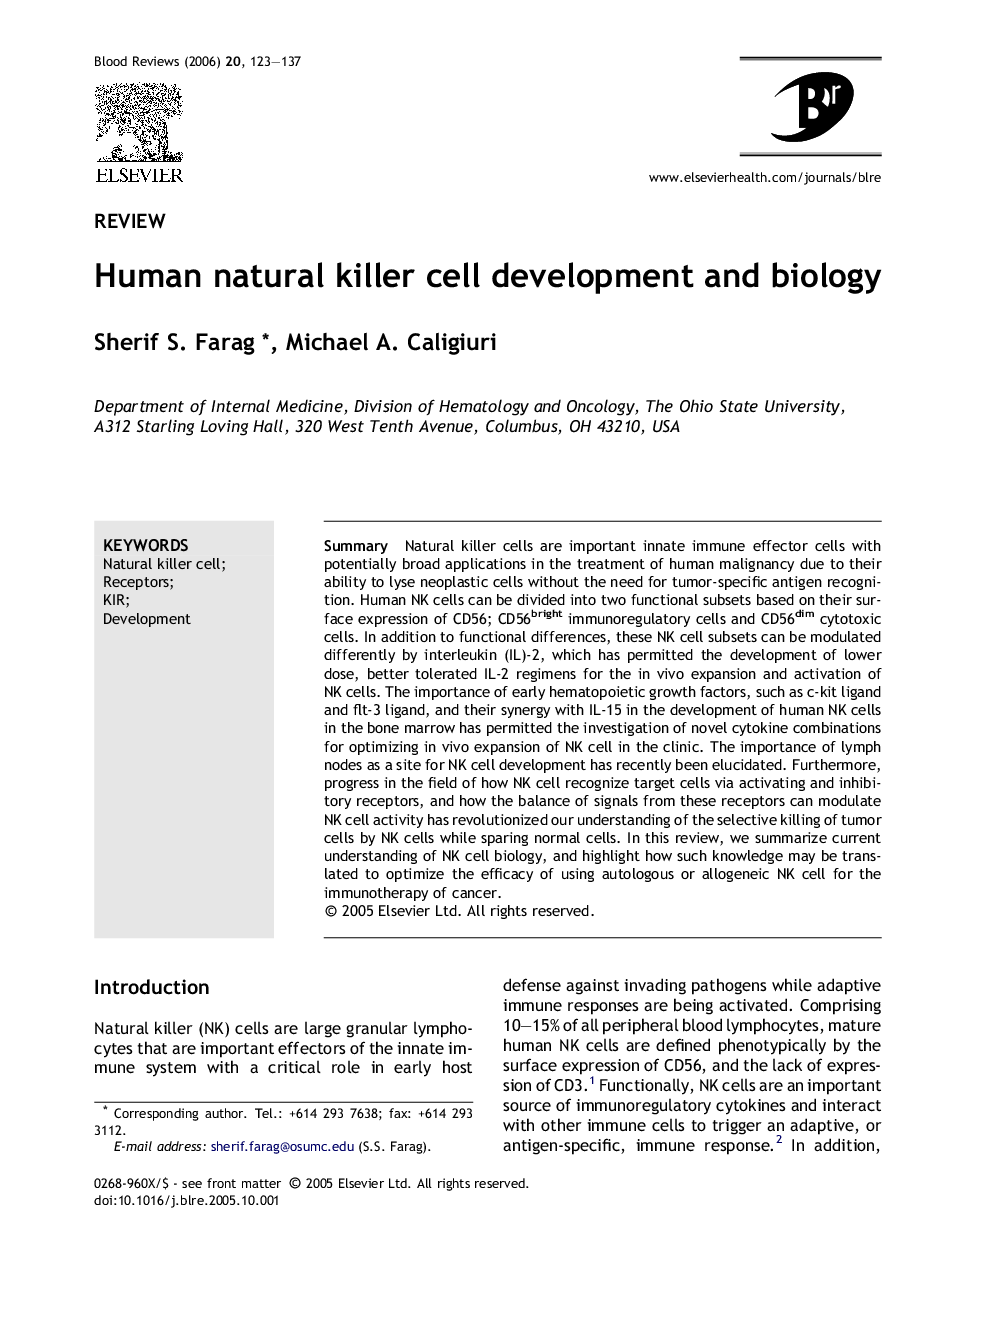 Human natural killer cell development and biology